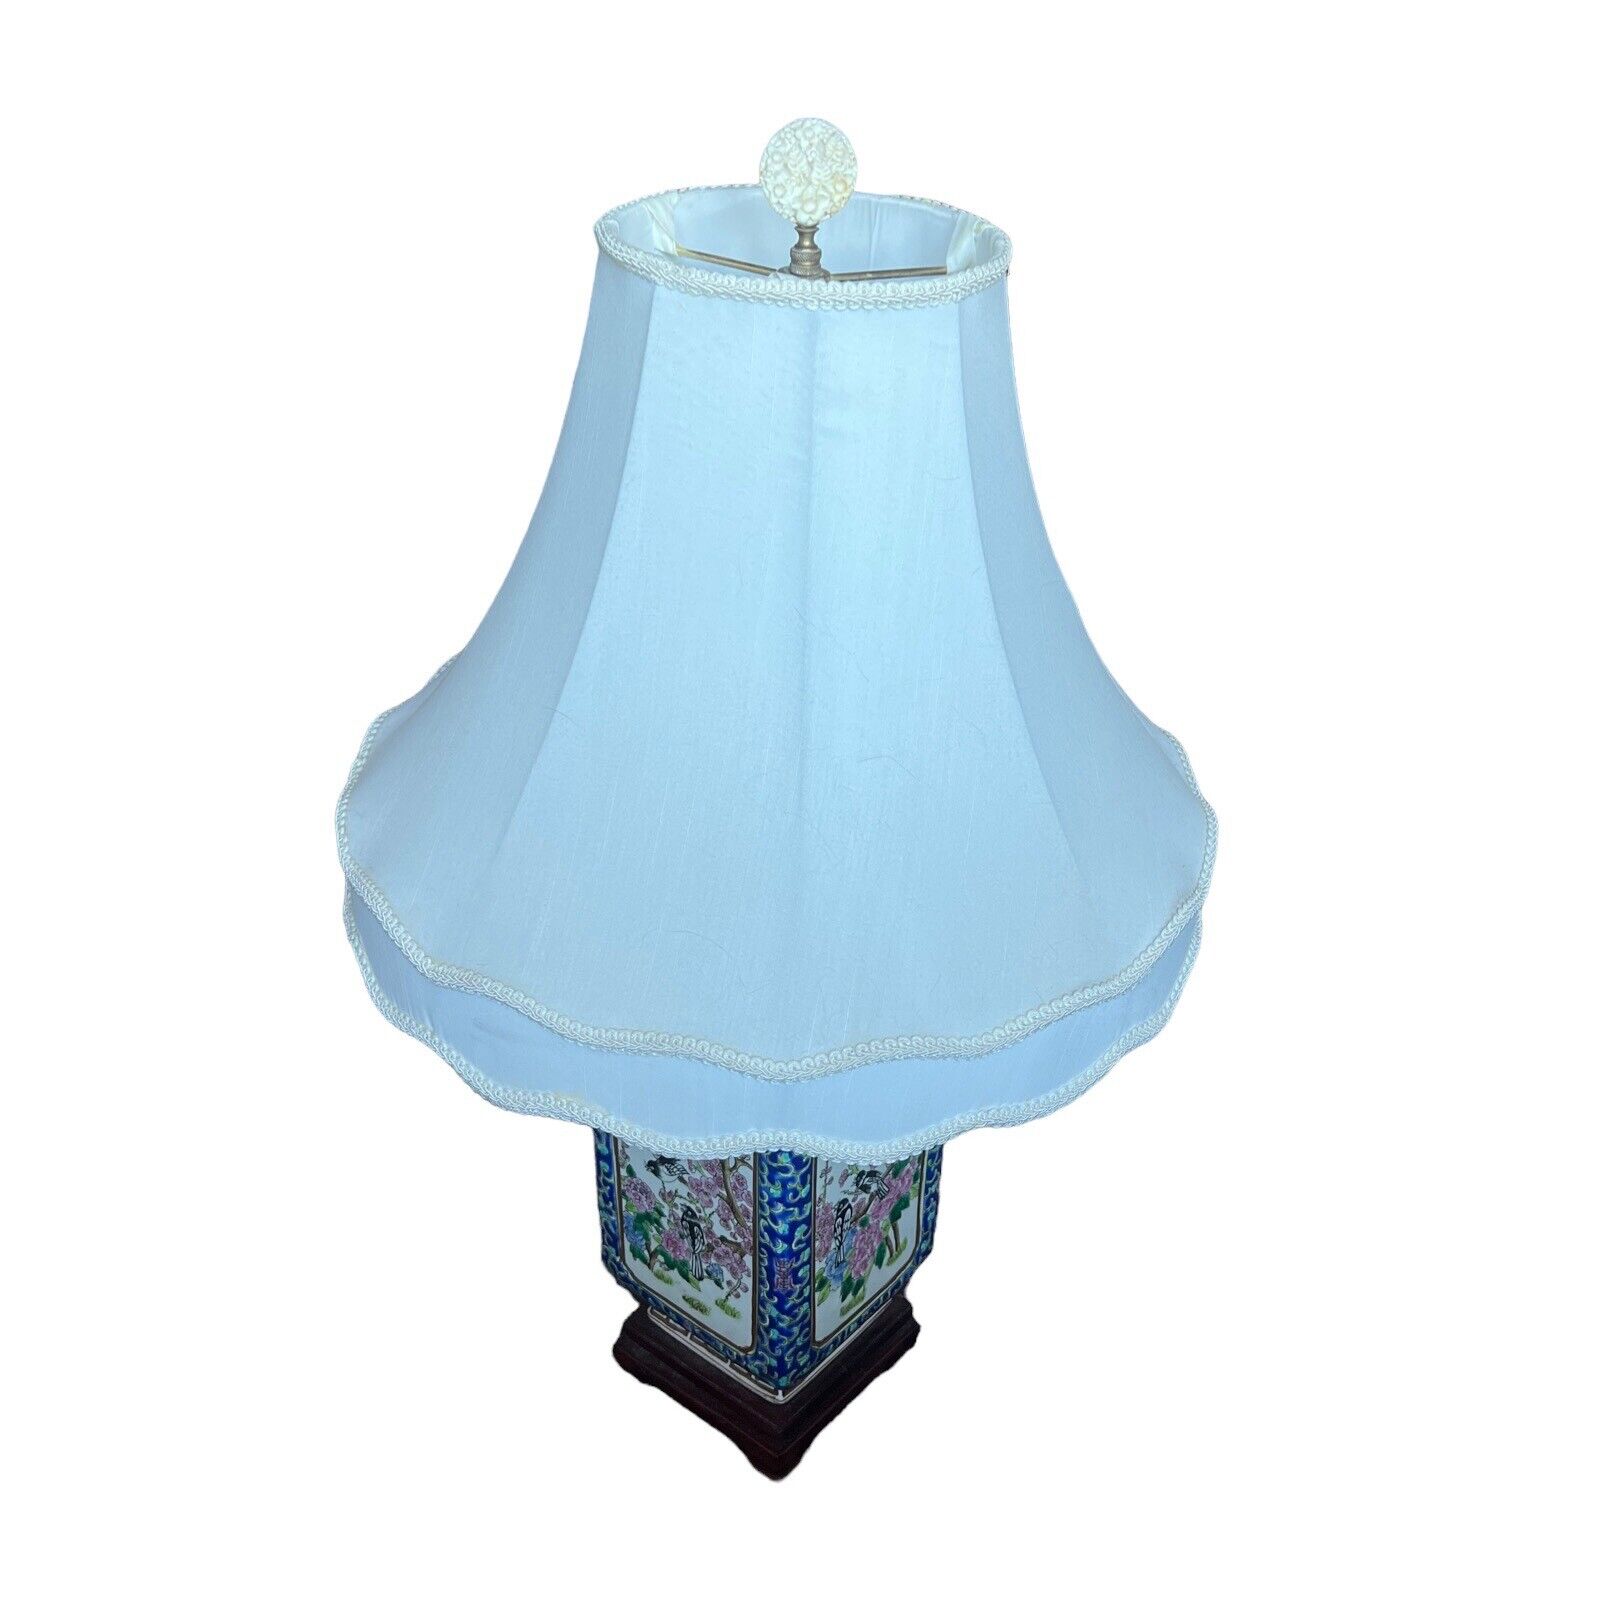 Stunning Vtg Oriental Chinoiserie Chinese Porcelain Wooden Base Table Lamp 29”